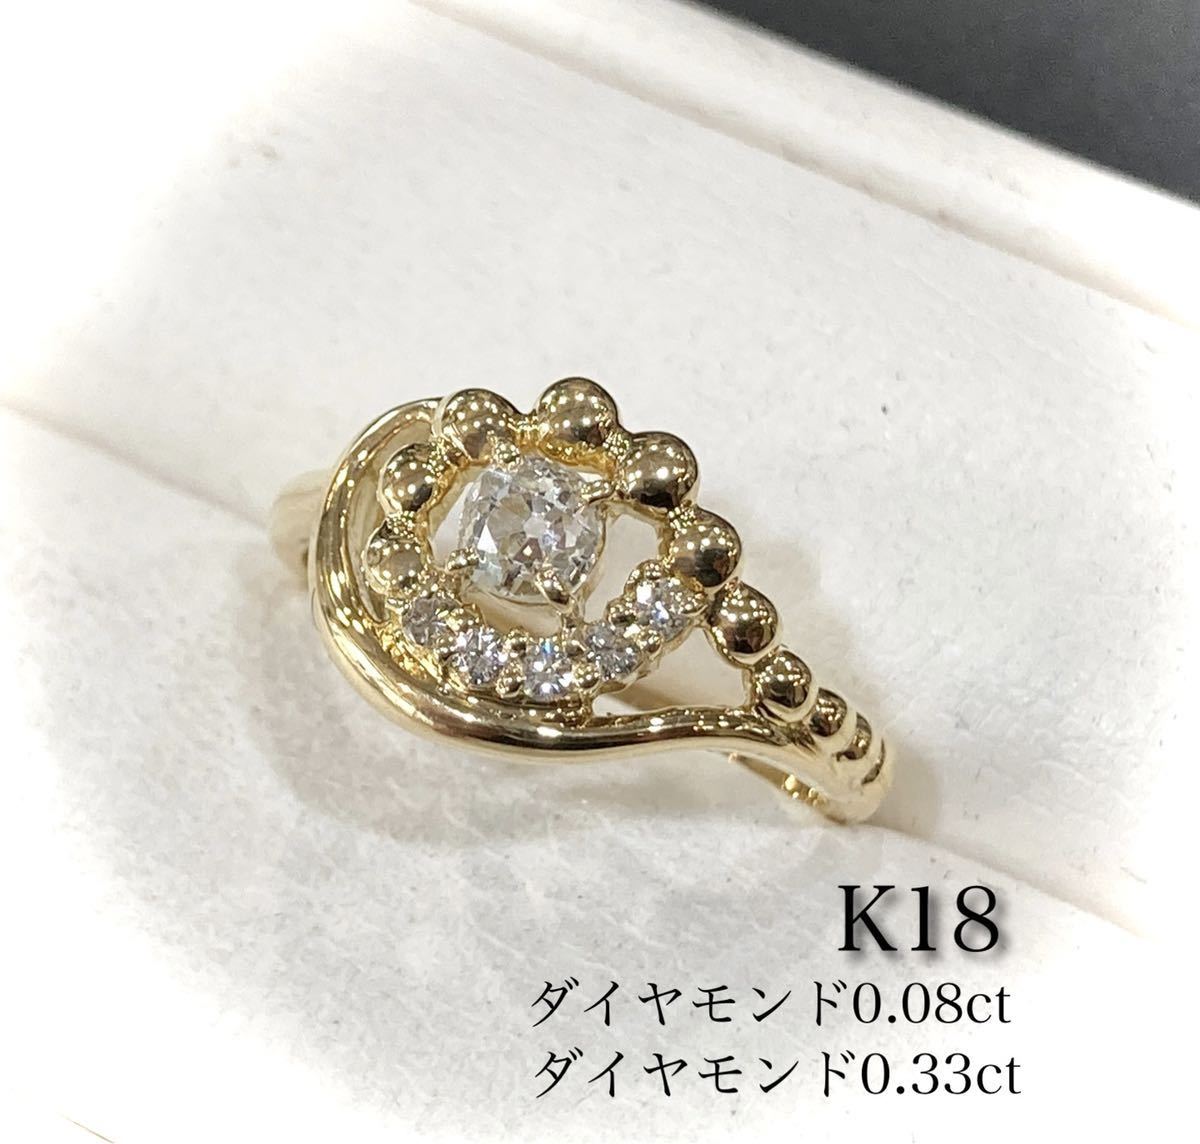 K18★ダイヤモンド メイン0.33ct+0.08ct リング 指輪 #15 新品加工済